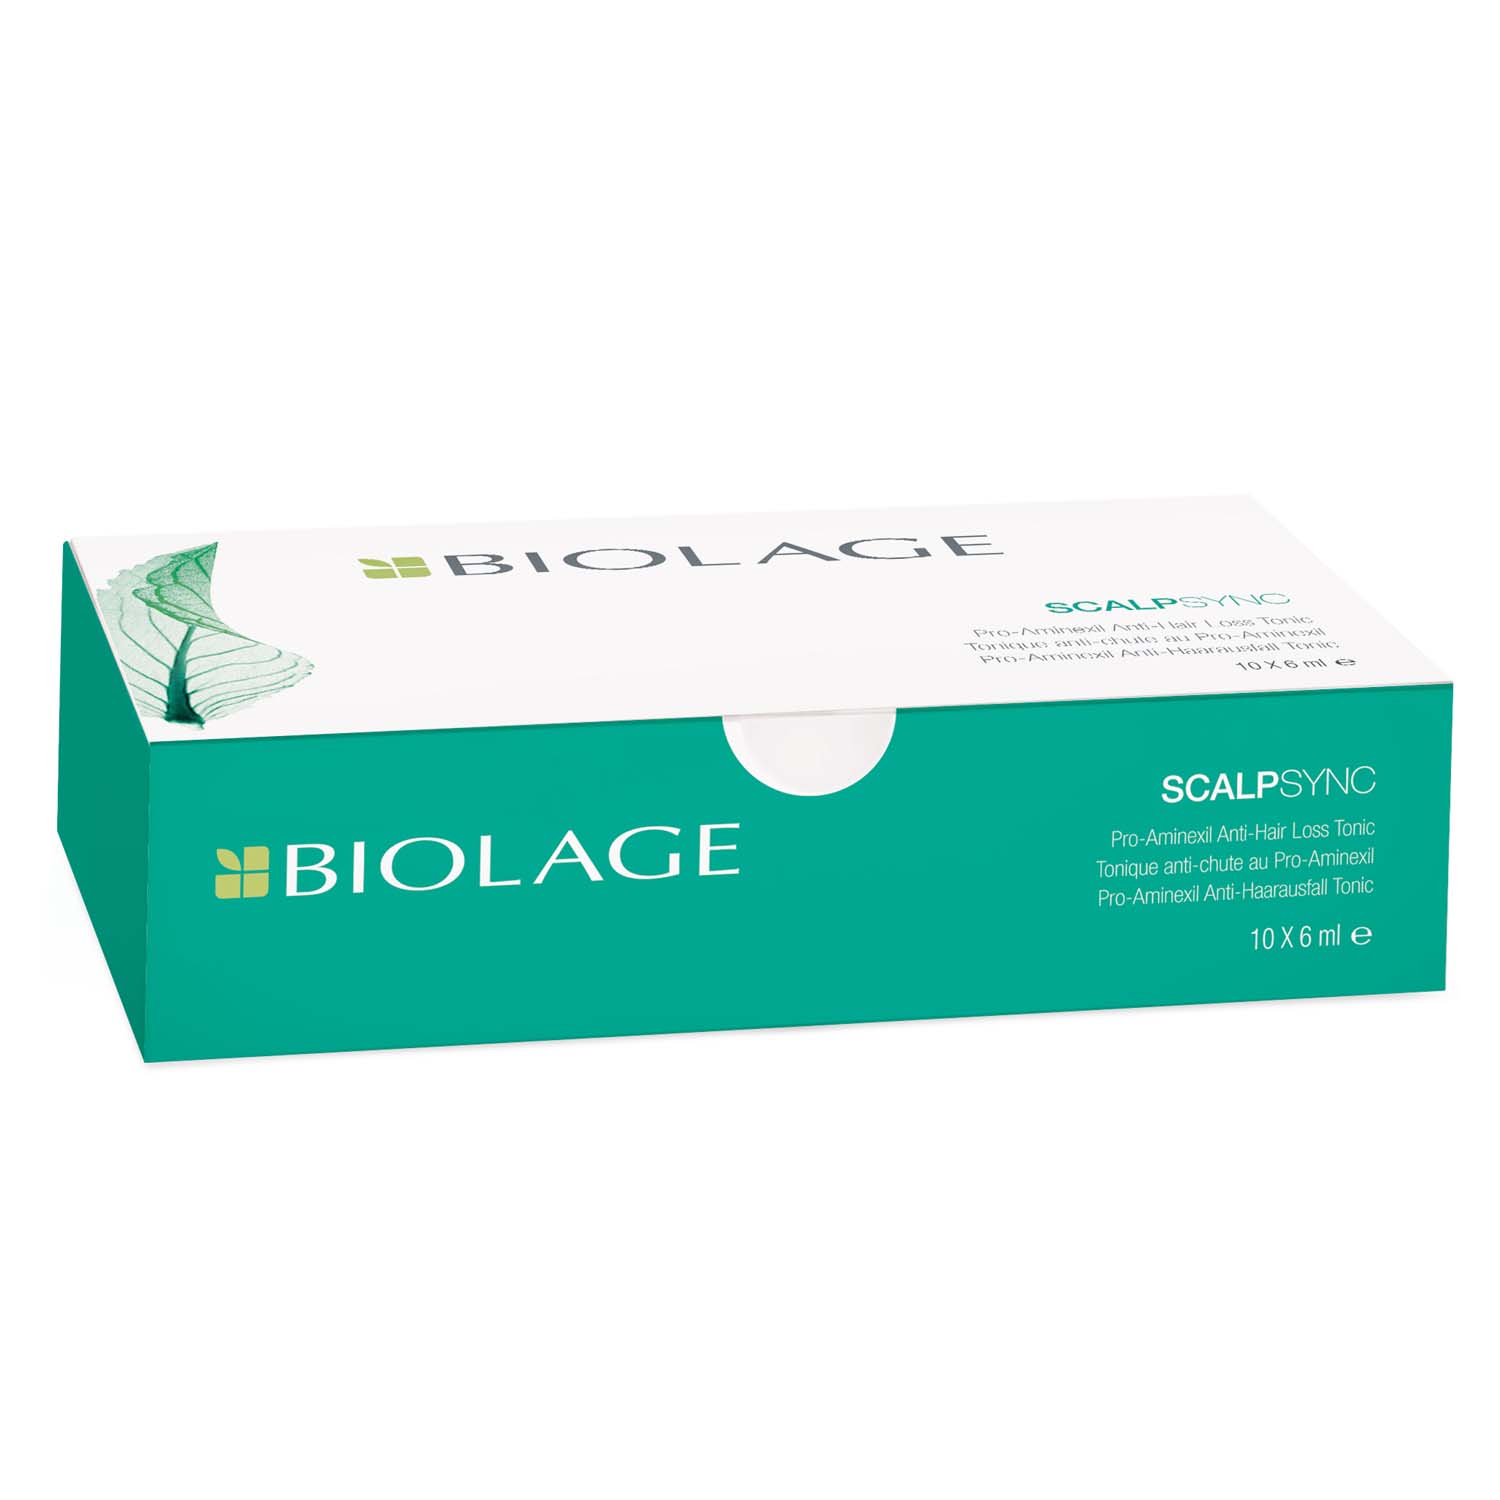 Biolage Scalptherapie Anti hair loss Tonic, 10x6 ml